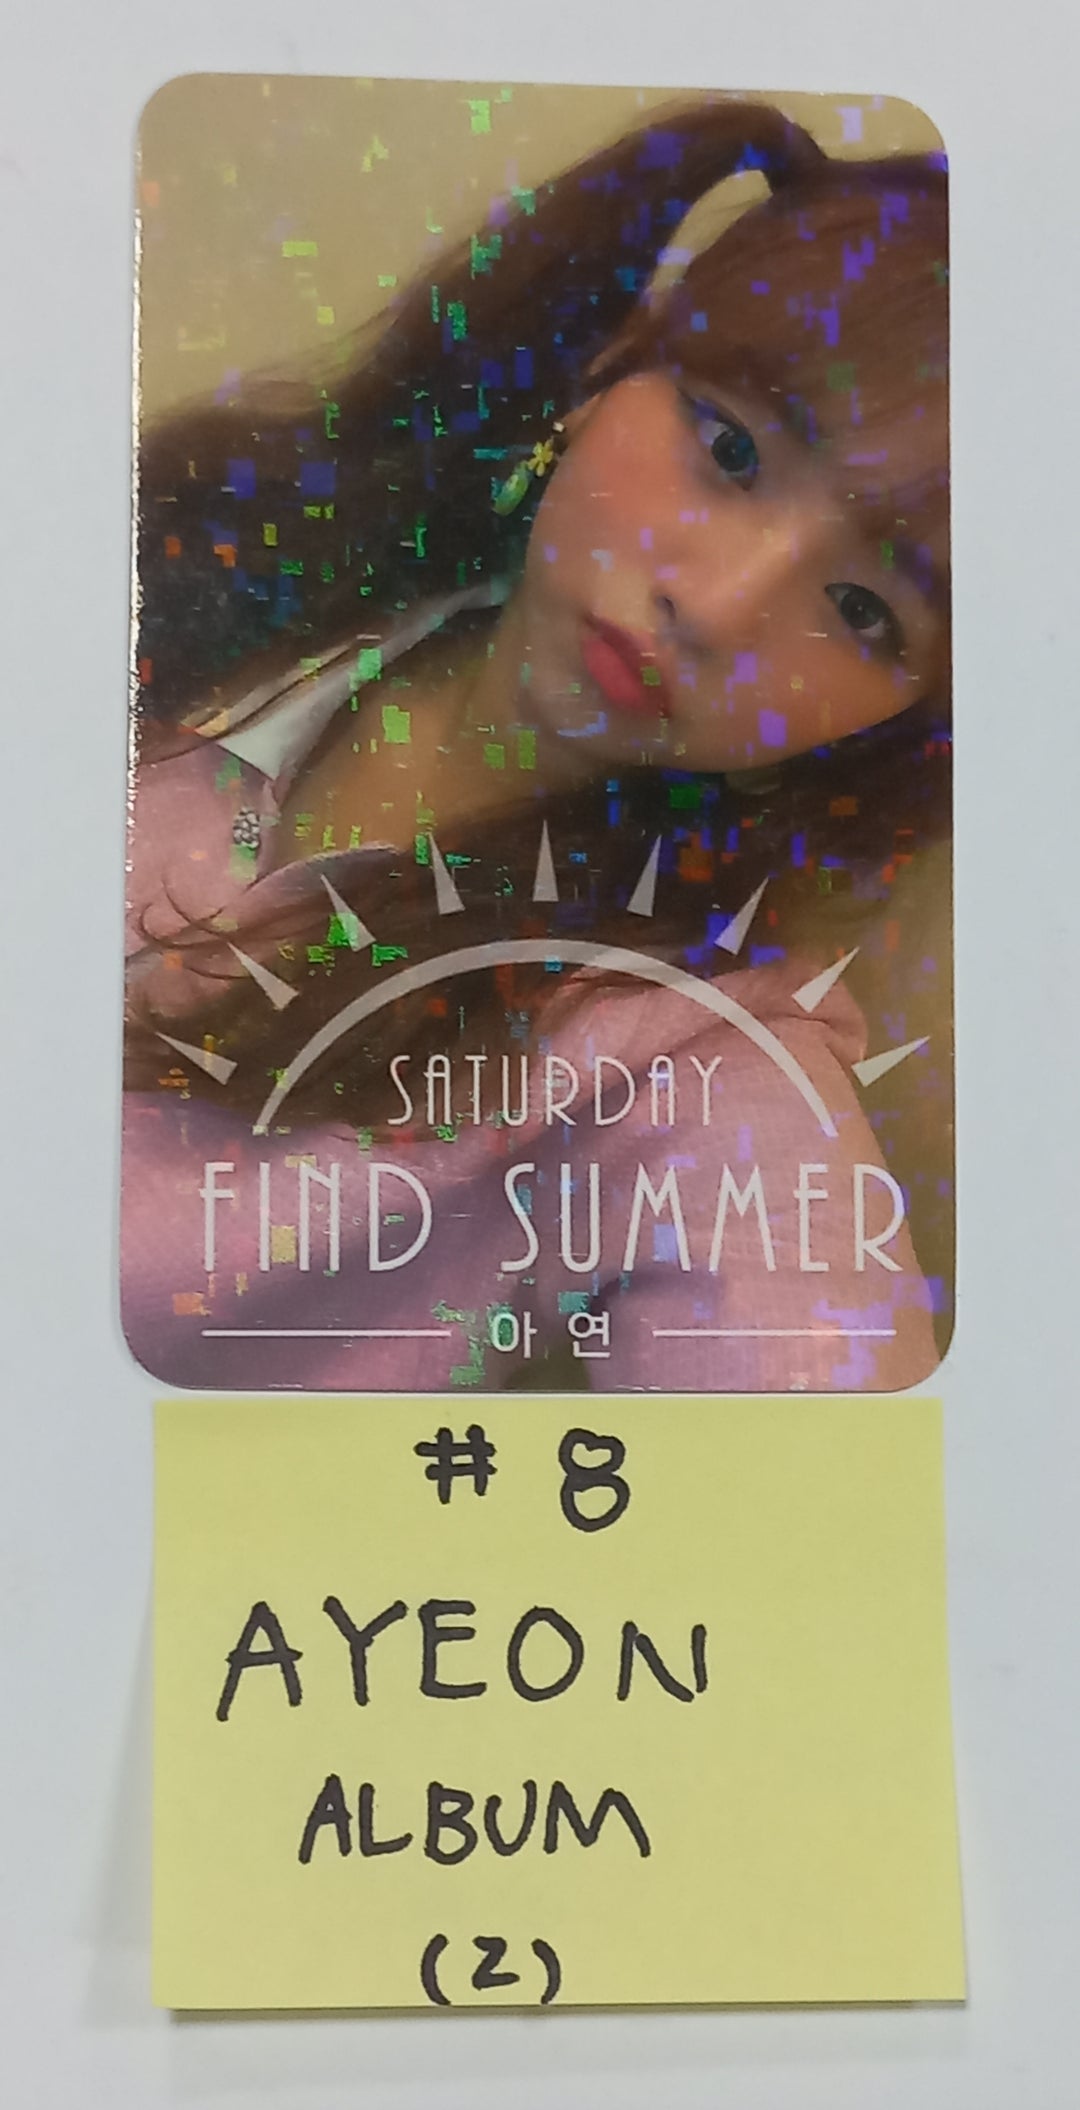 SATURDAY "Find Summer" - Afreeca TV "Making My Favorite I-dol project" - 直筆サイン入りアルバム &amp; ペーパー + イベントフォトカード + 公式フォトカード [23.08.24] 